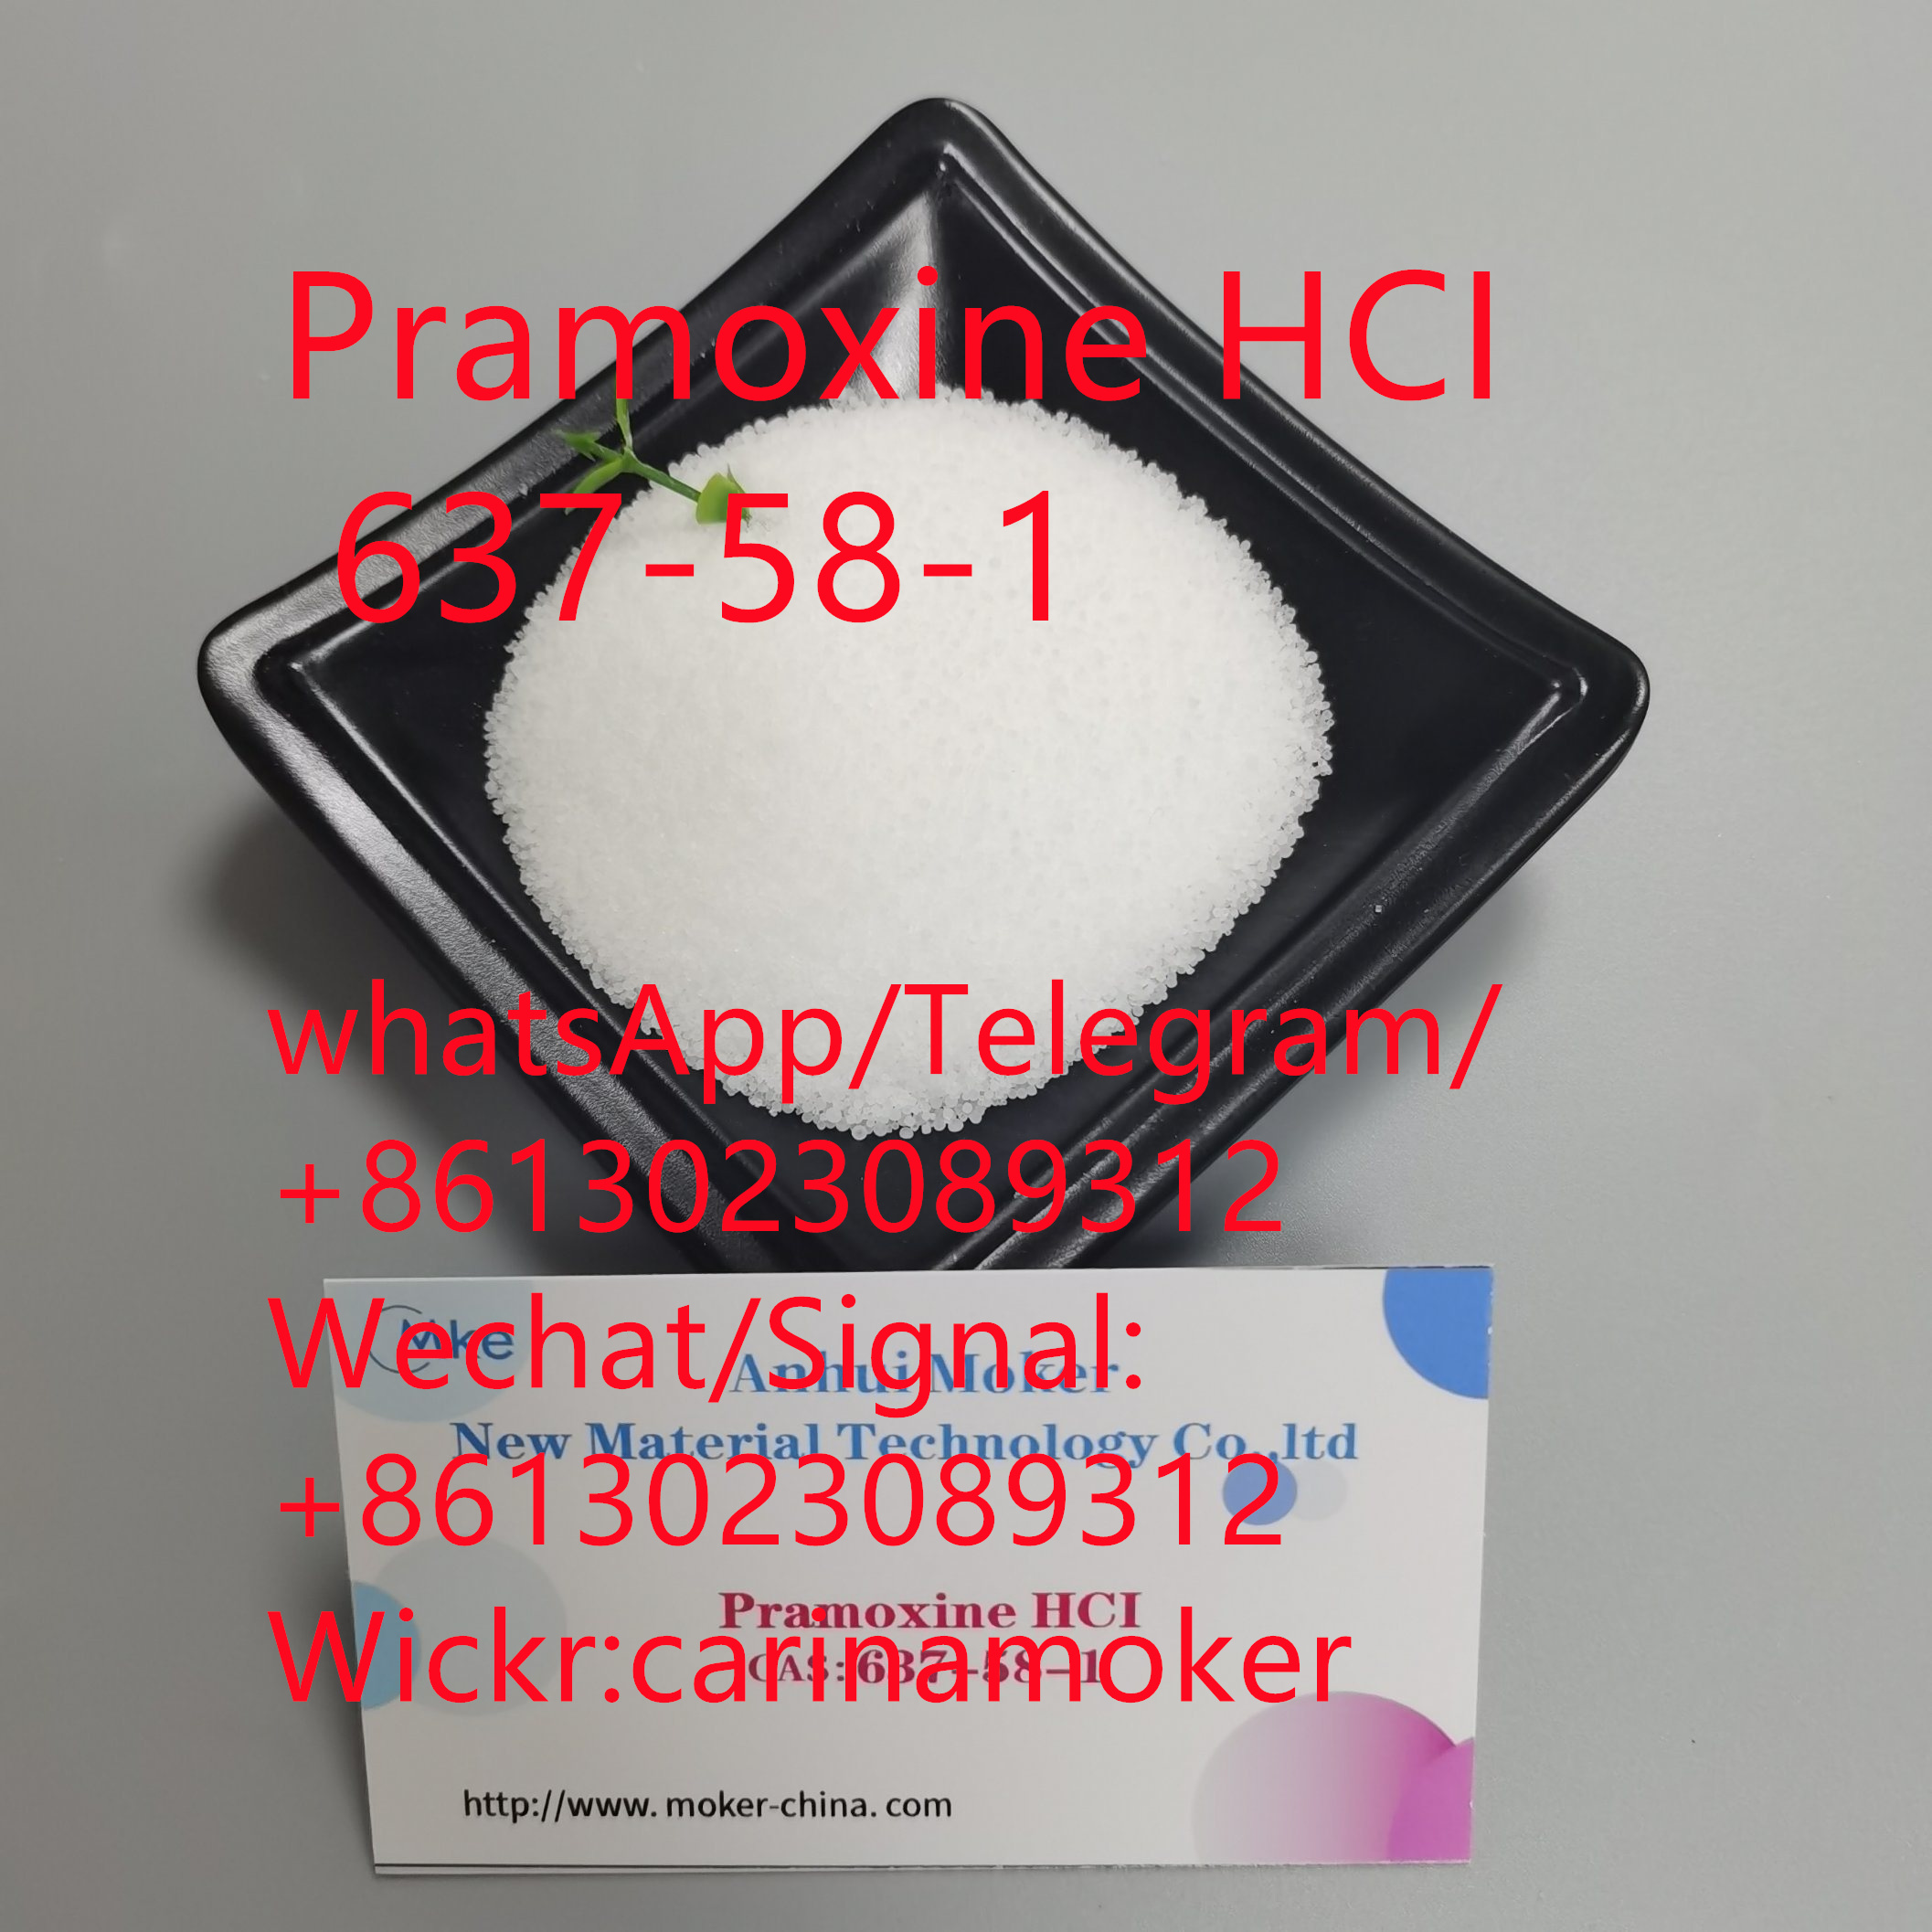 High quanlity Pramoxine HCI 637-58-1 